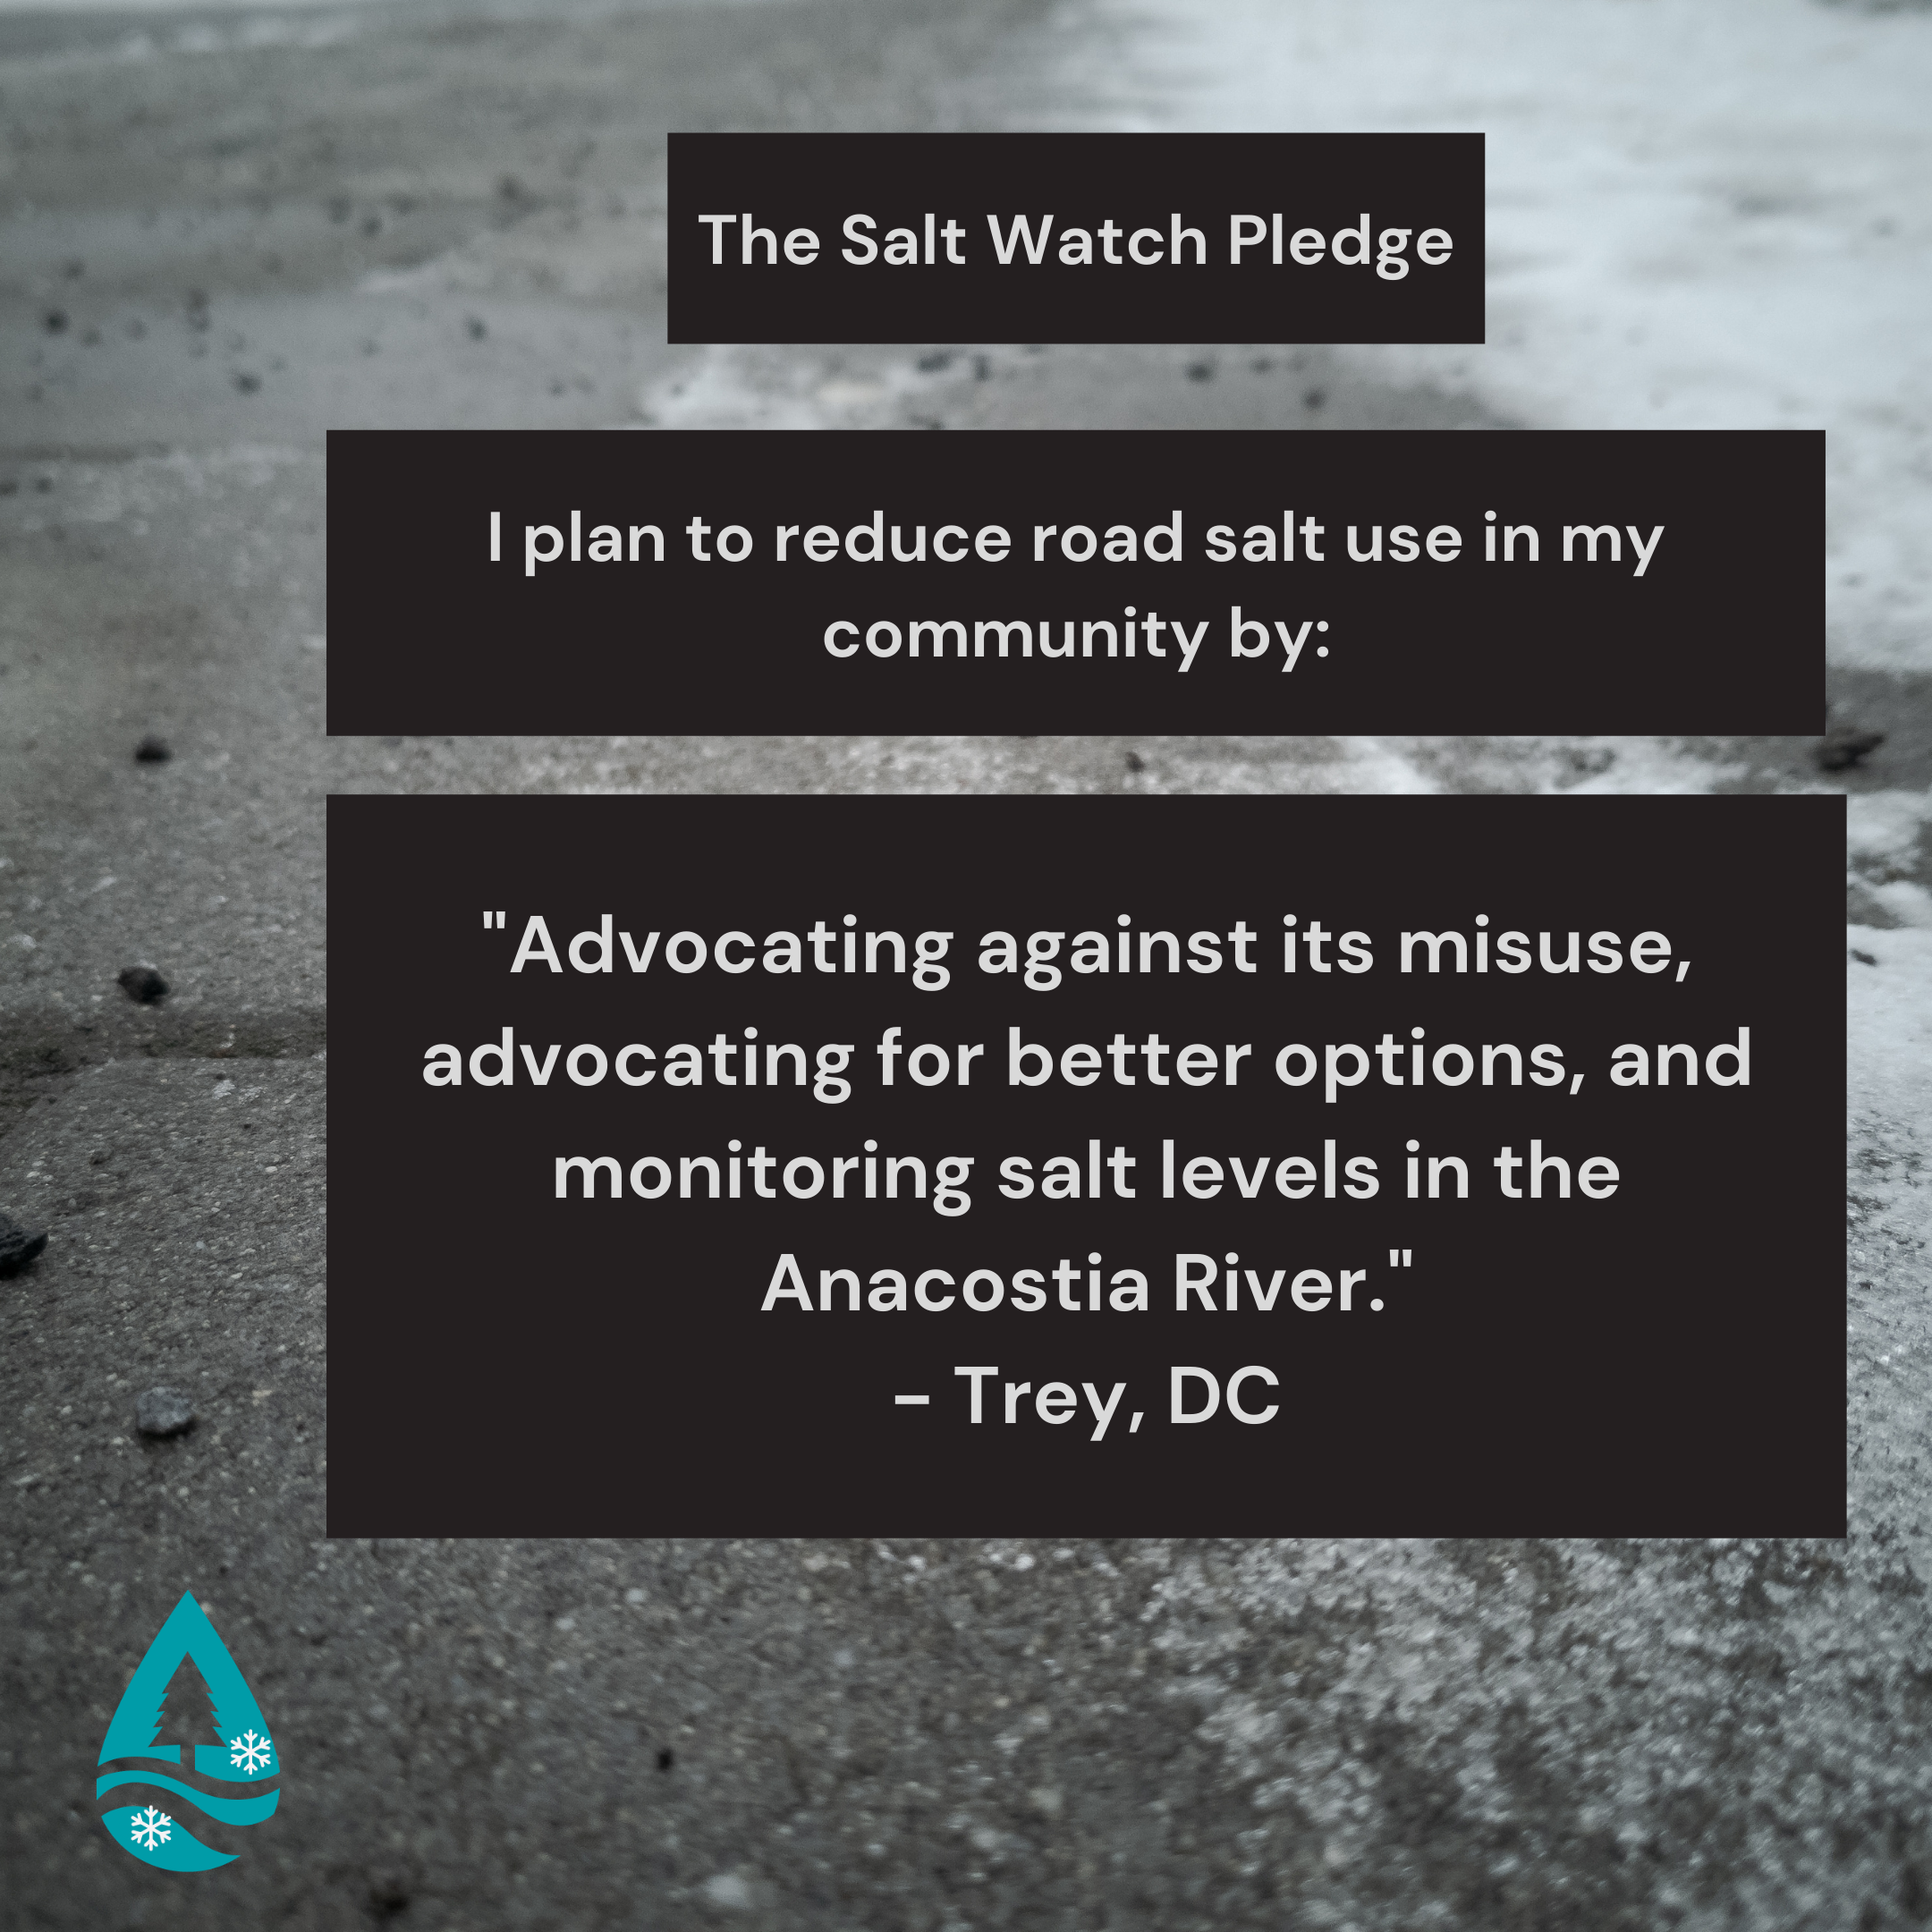 Salt Watch pledge - Trey